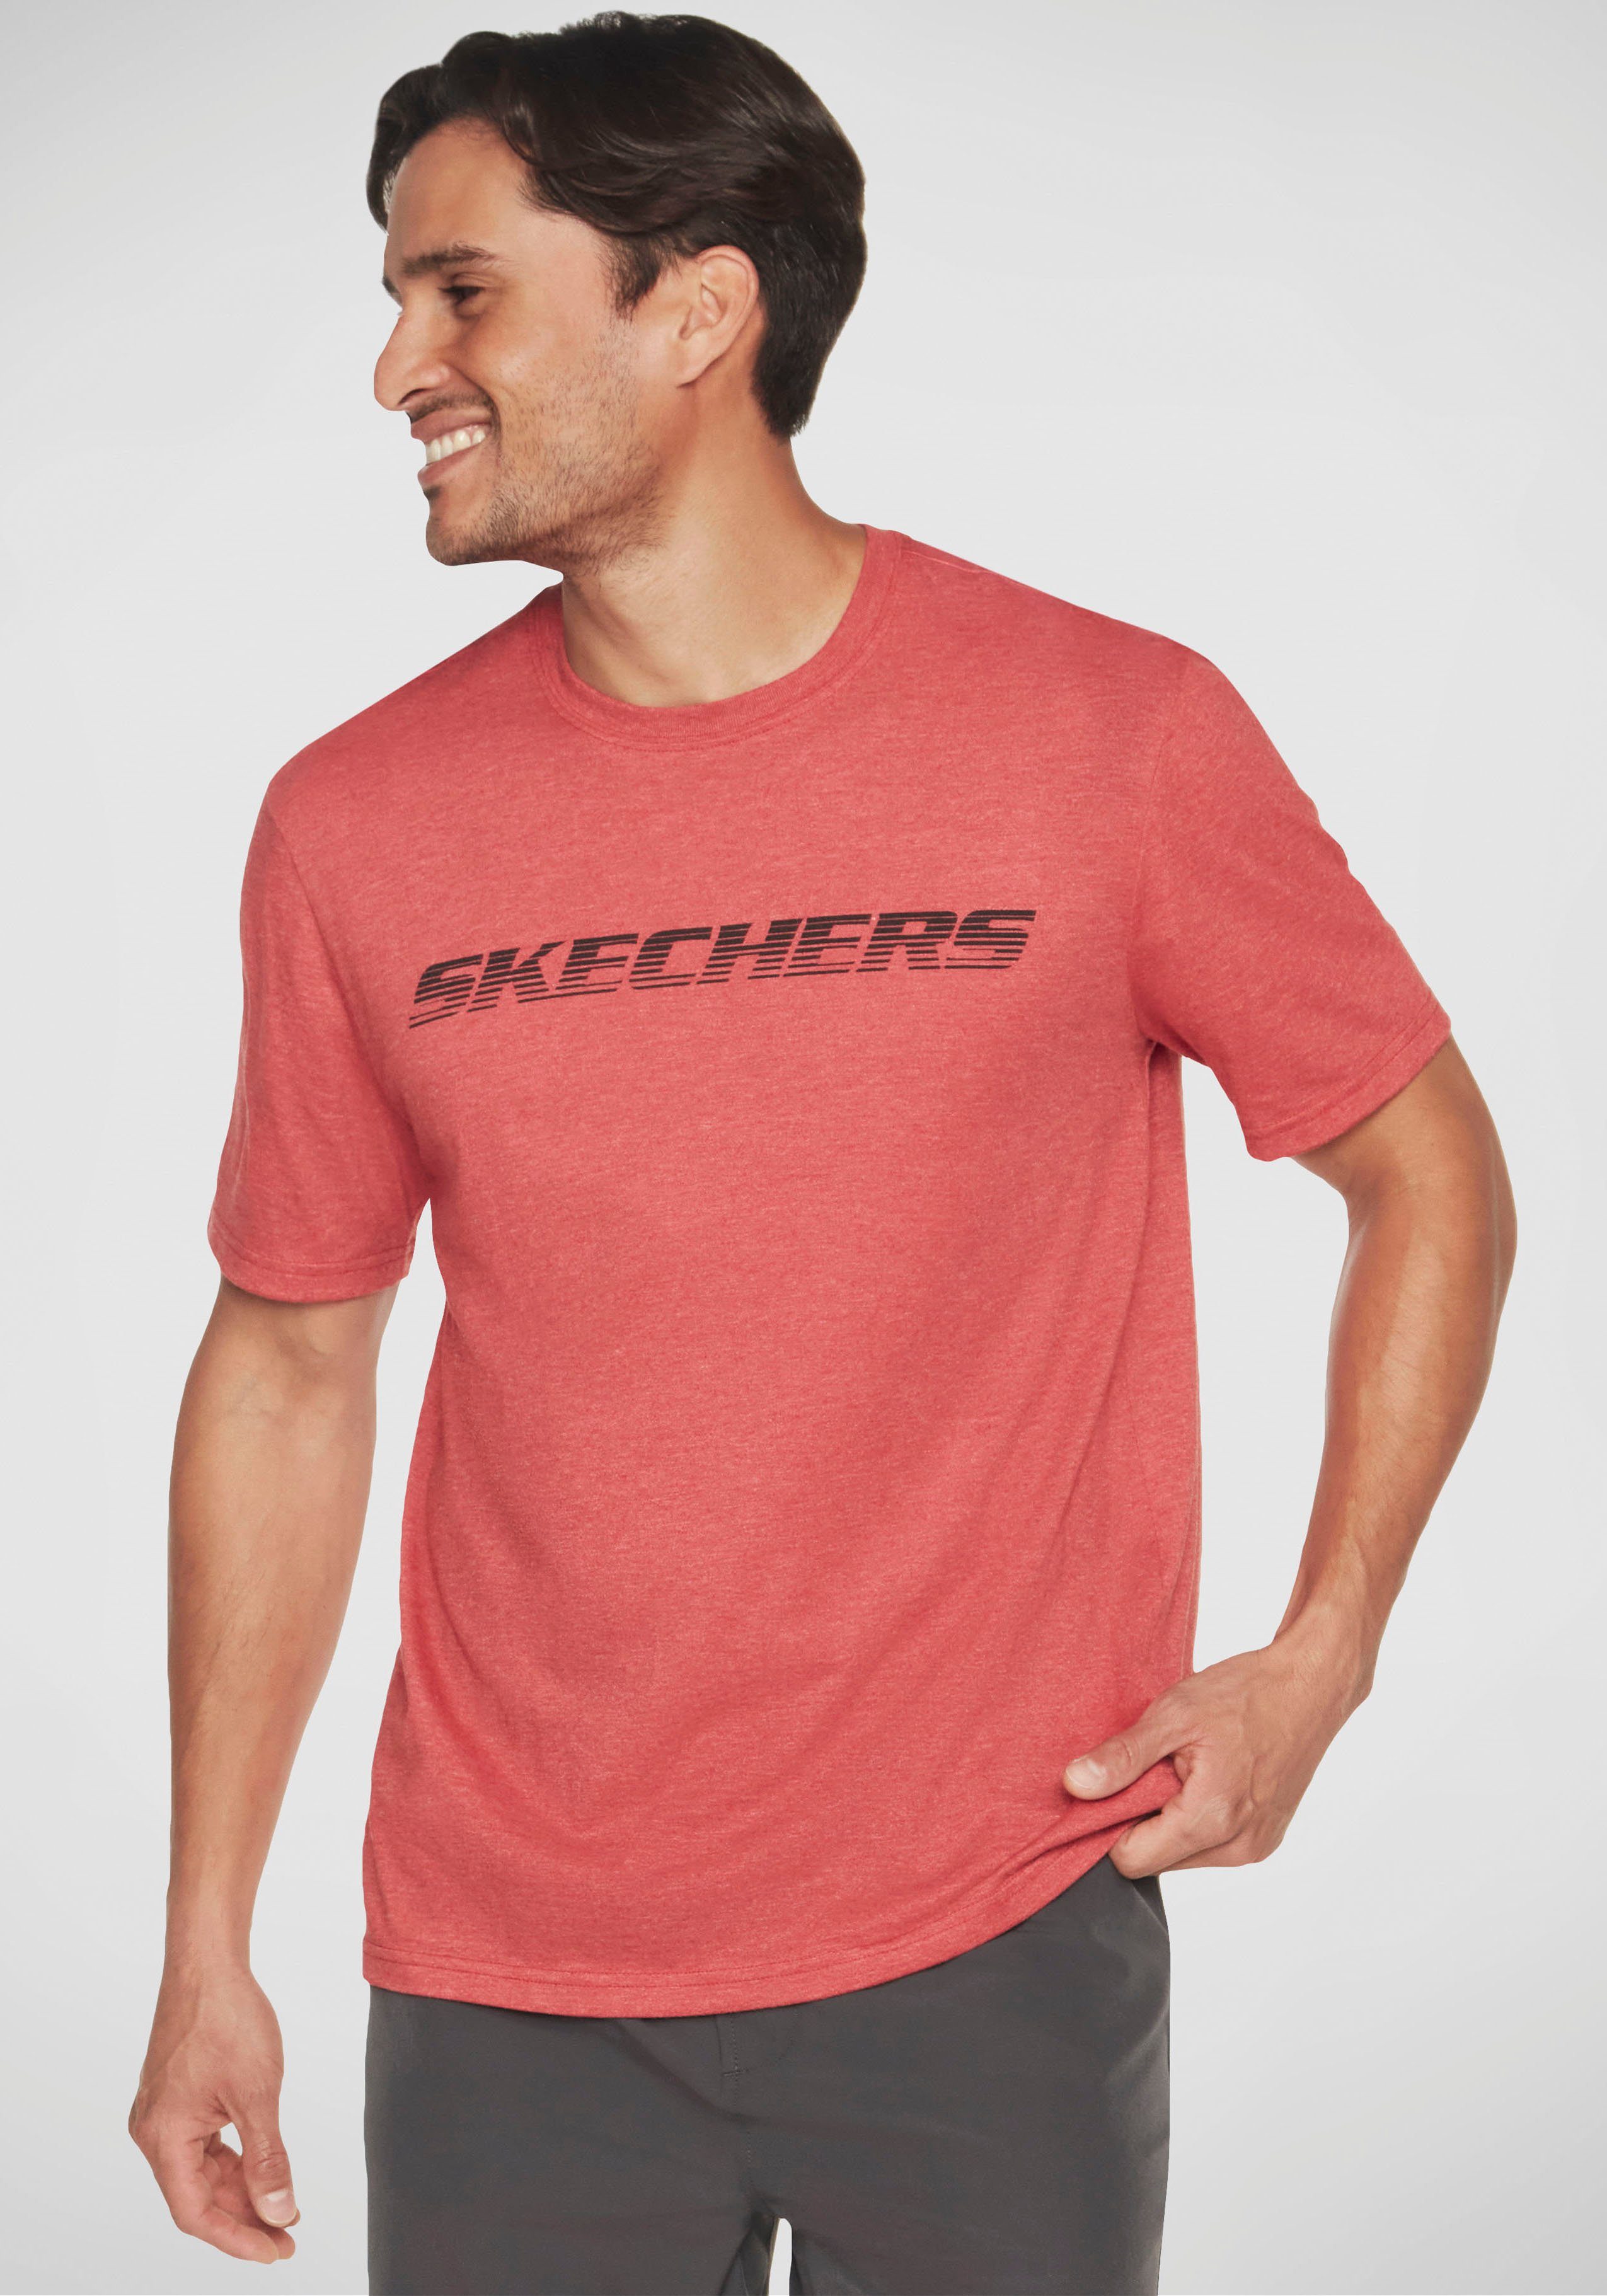 Skechers T-Shirt TEE MOTION rot